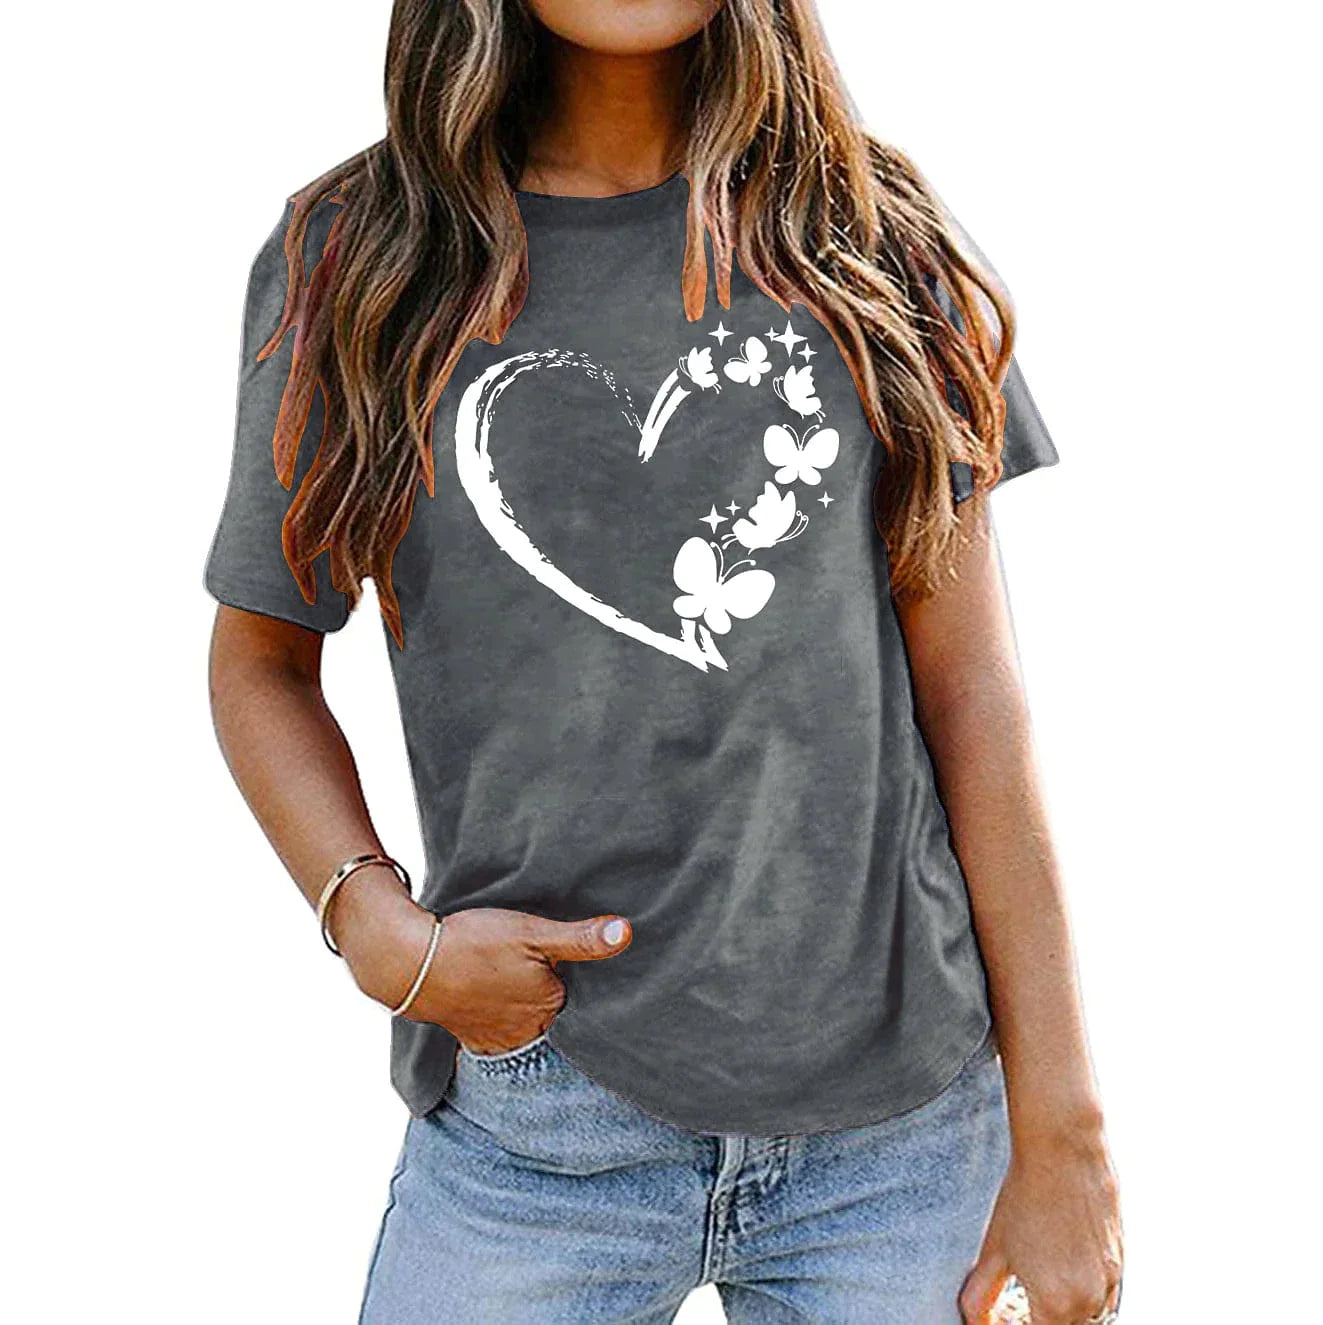 Heart Butterfly Print 100% Cotton Women's T-shirt Peace Green & Black White Basic Short Sleeve